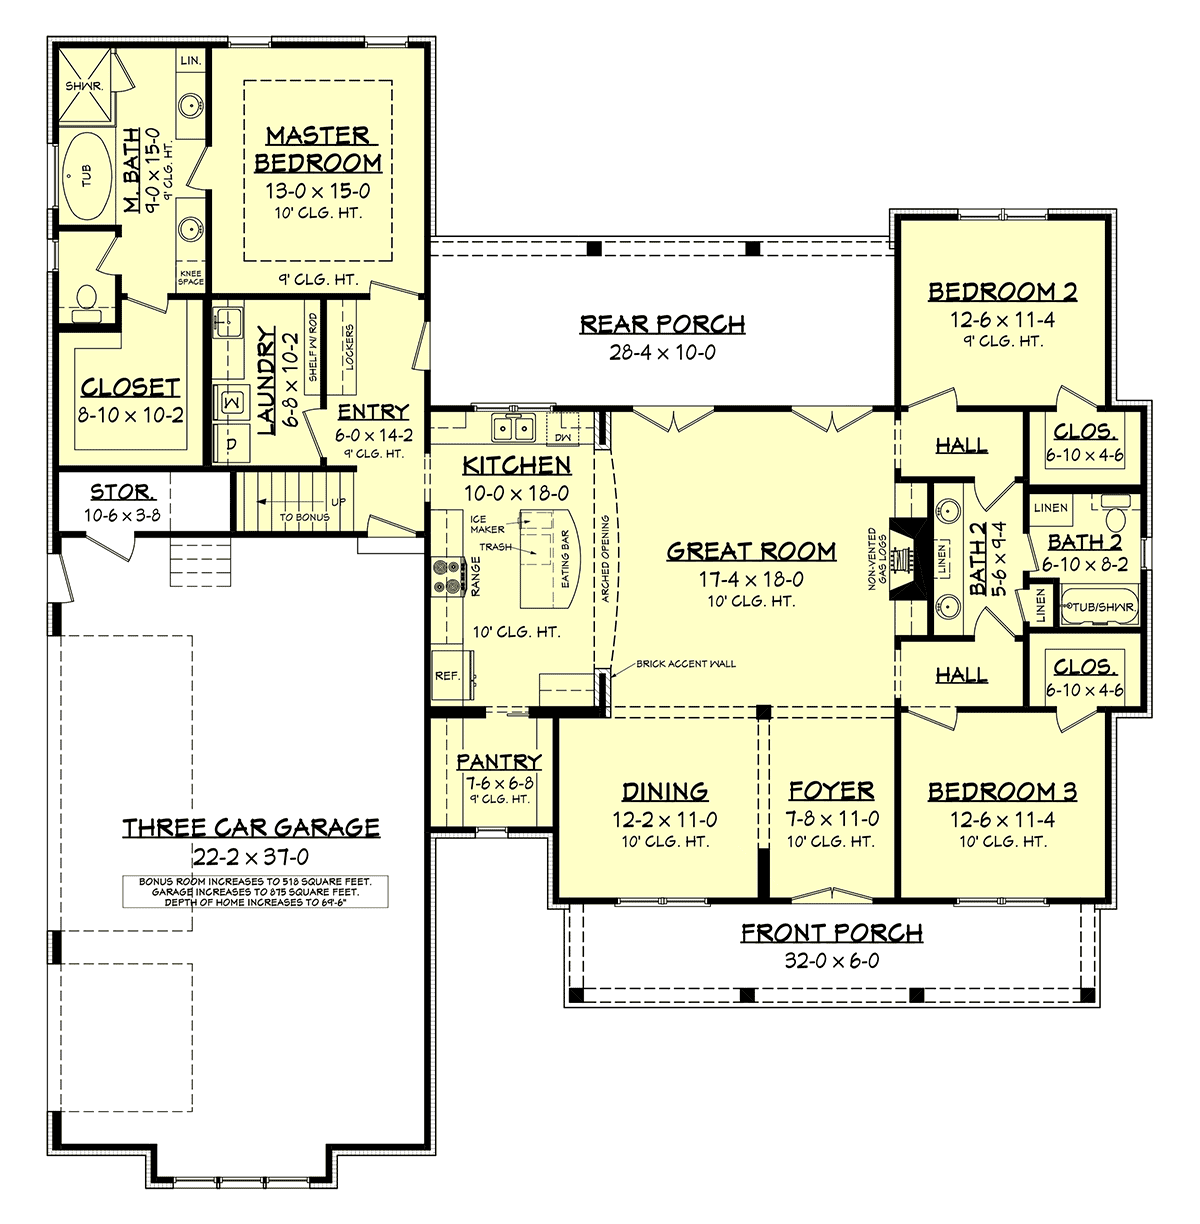 House Plan 56912 Alternate Level One